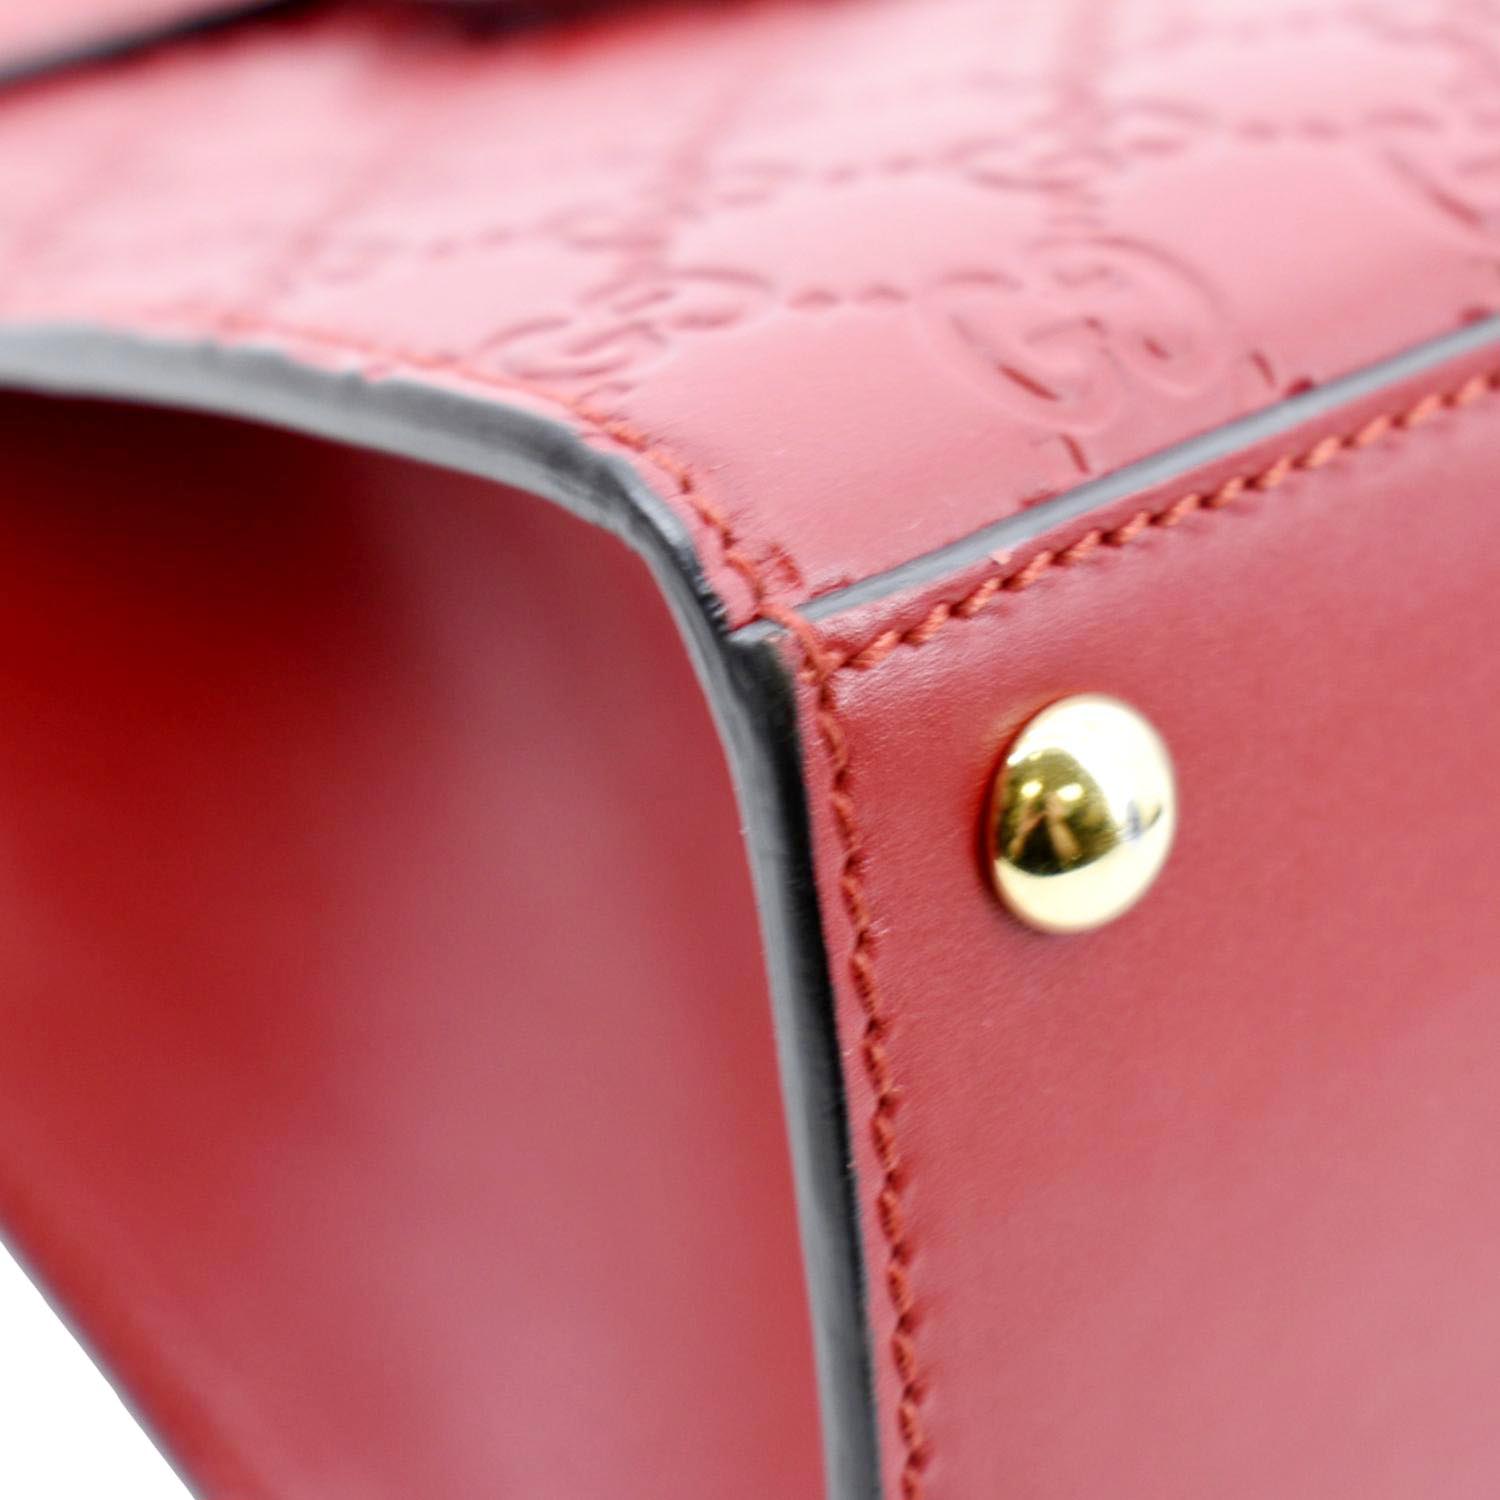 Gucci Purple Guccissima Leather Padlock Shoulder Handbag